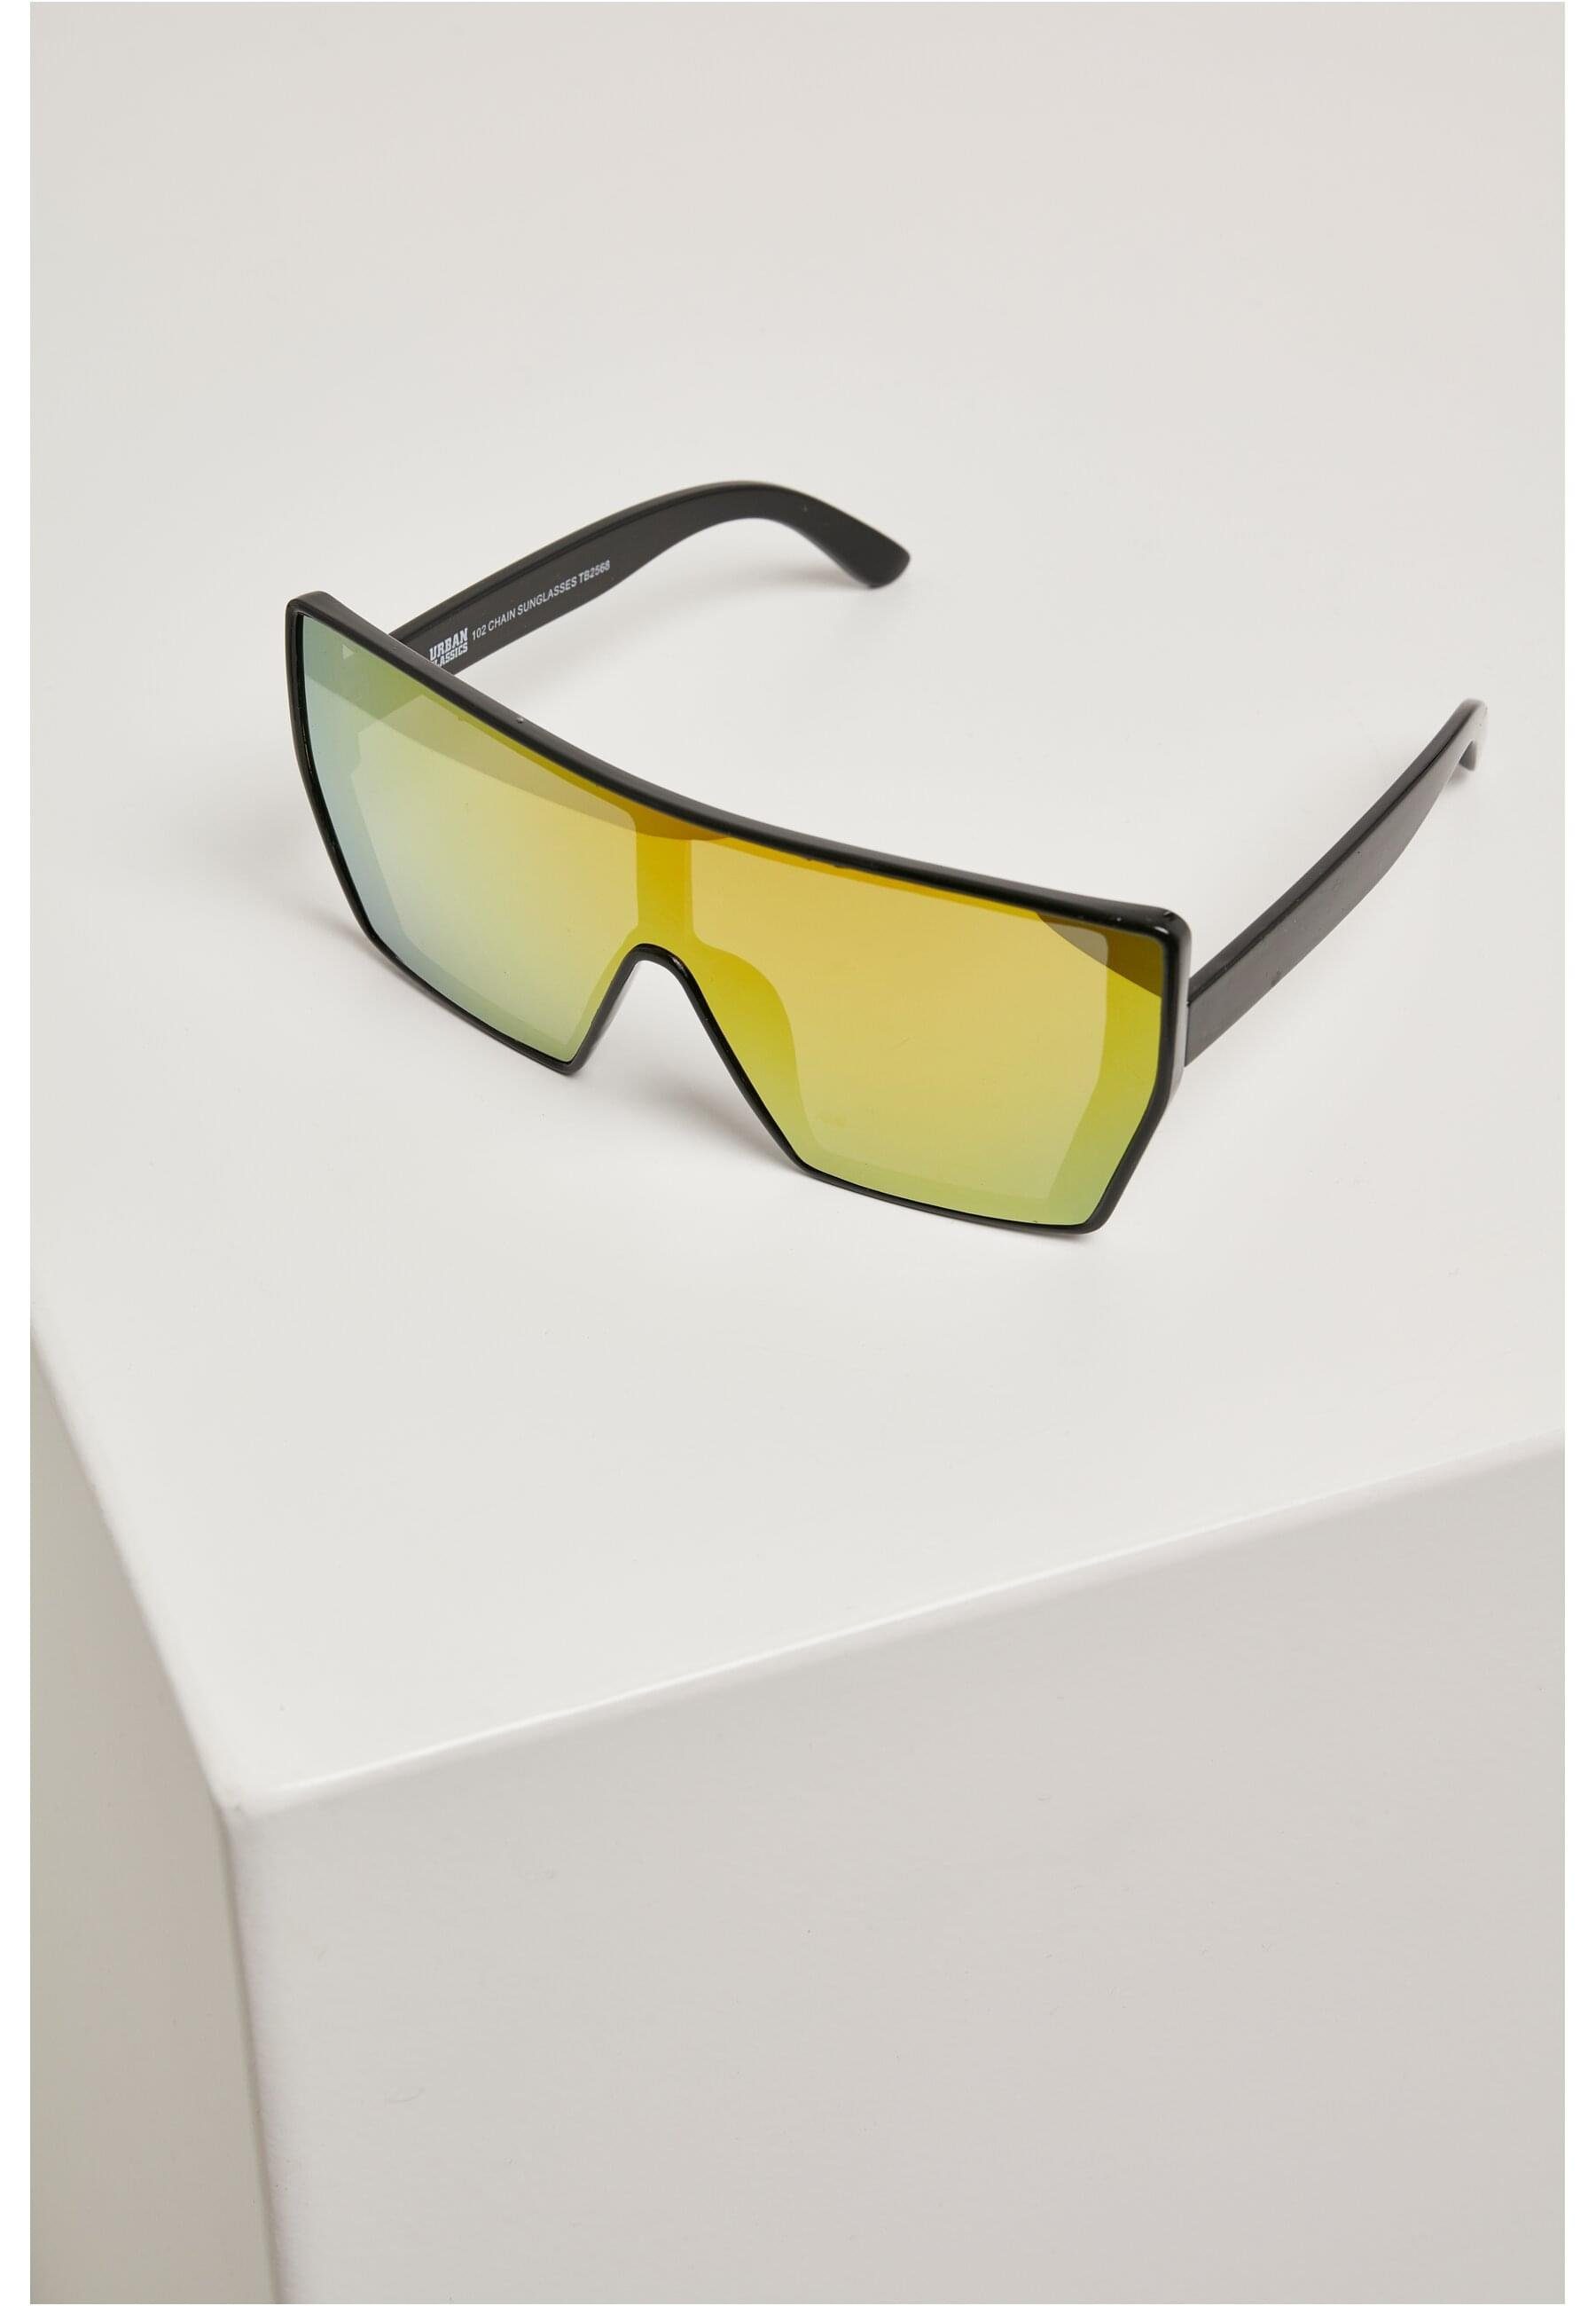 Chain CLASSICS Sonnenbrille Chain blk/yellow 102 TB2568 Sunglasses URBAN 102 Unisex